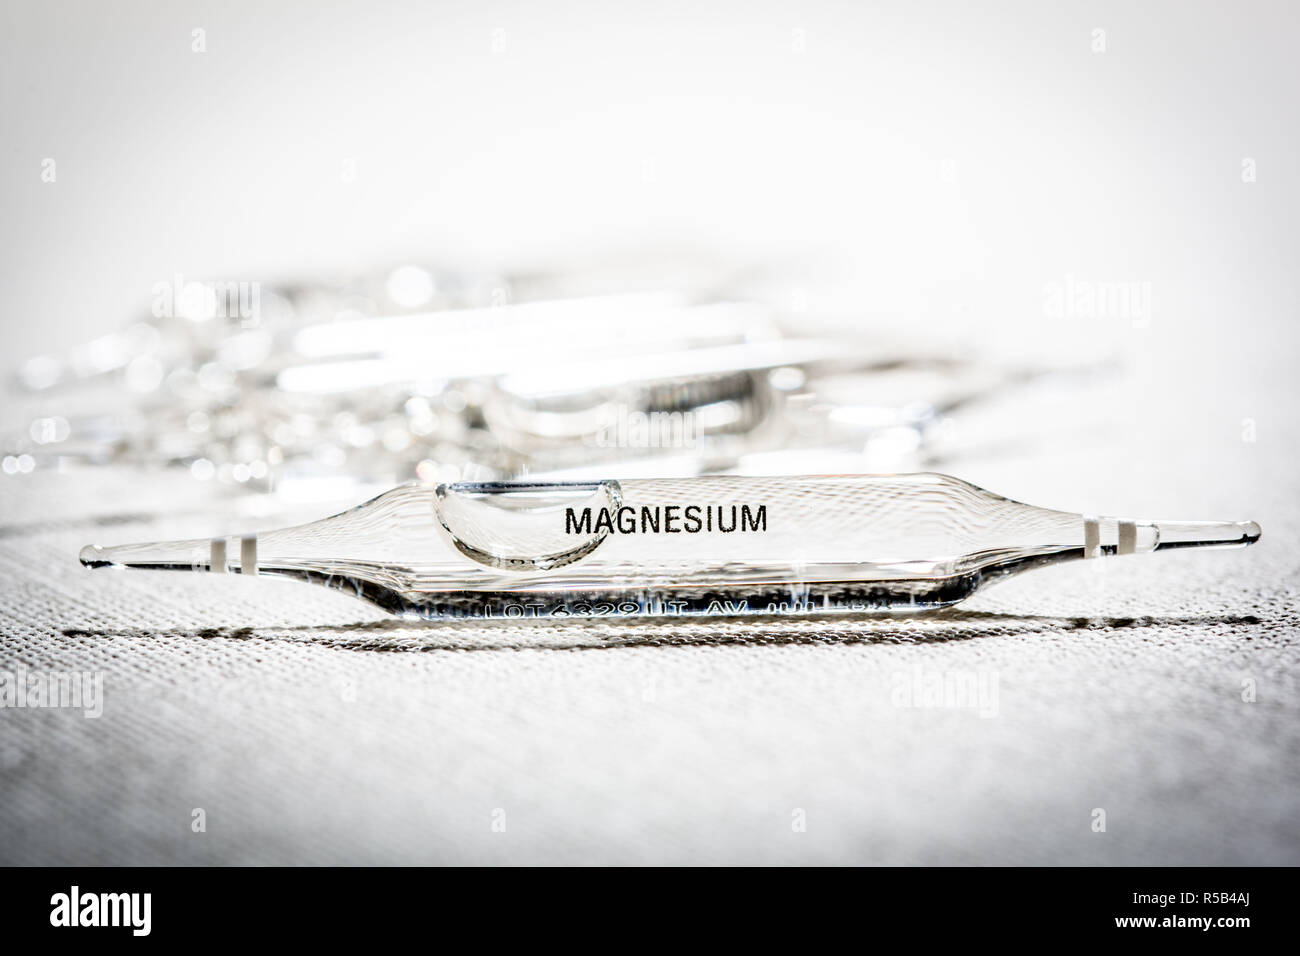 Magnesium glass ampoule. Stock Photo